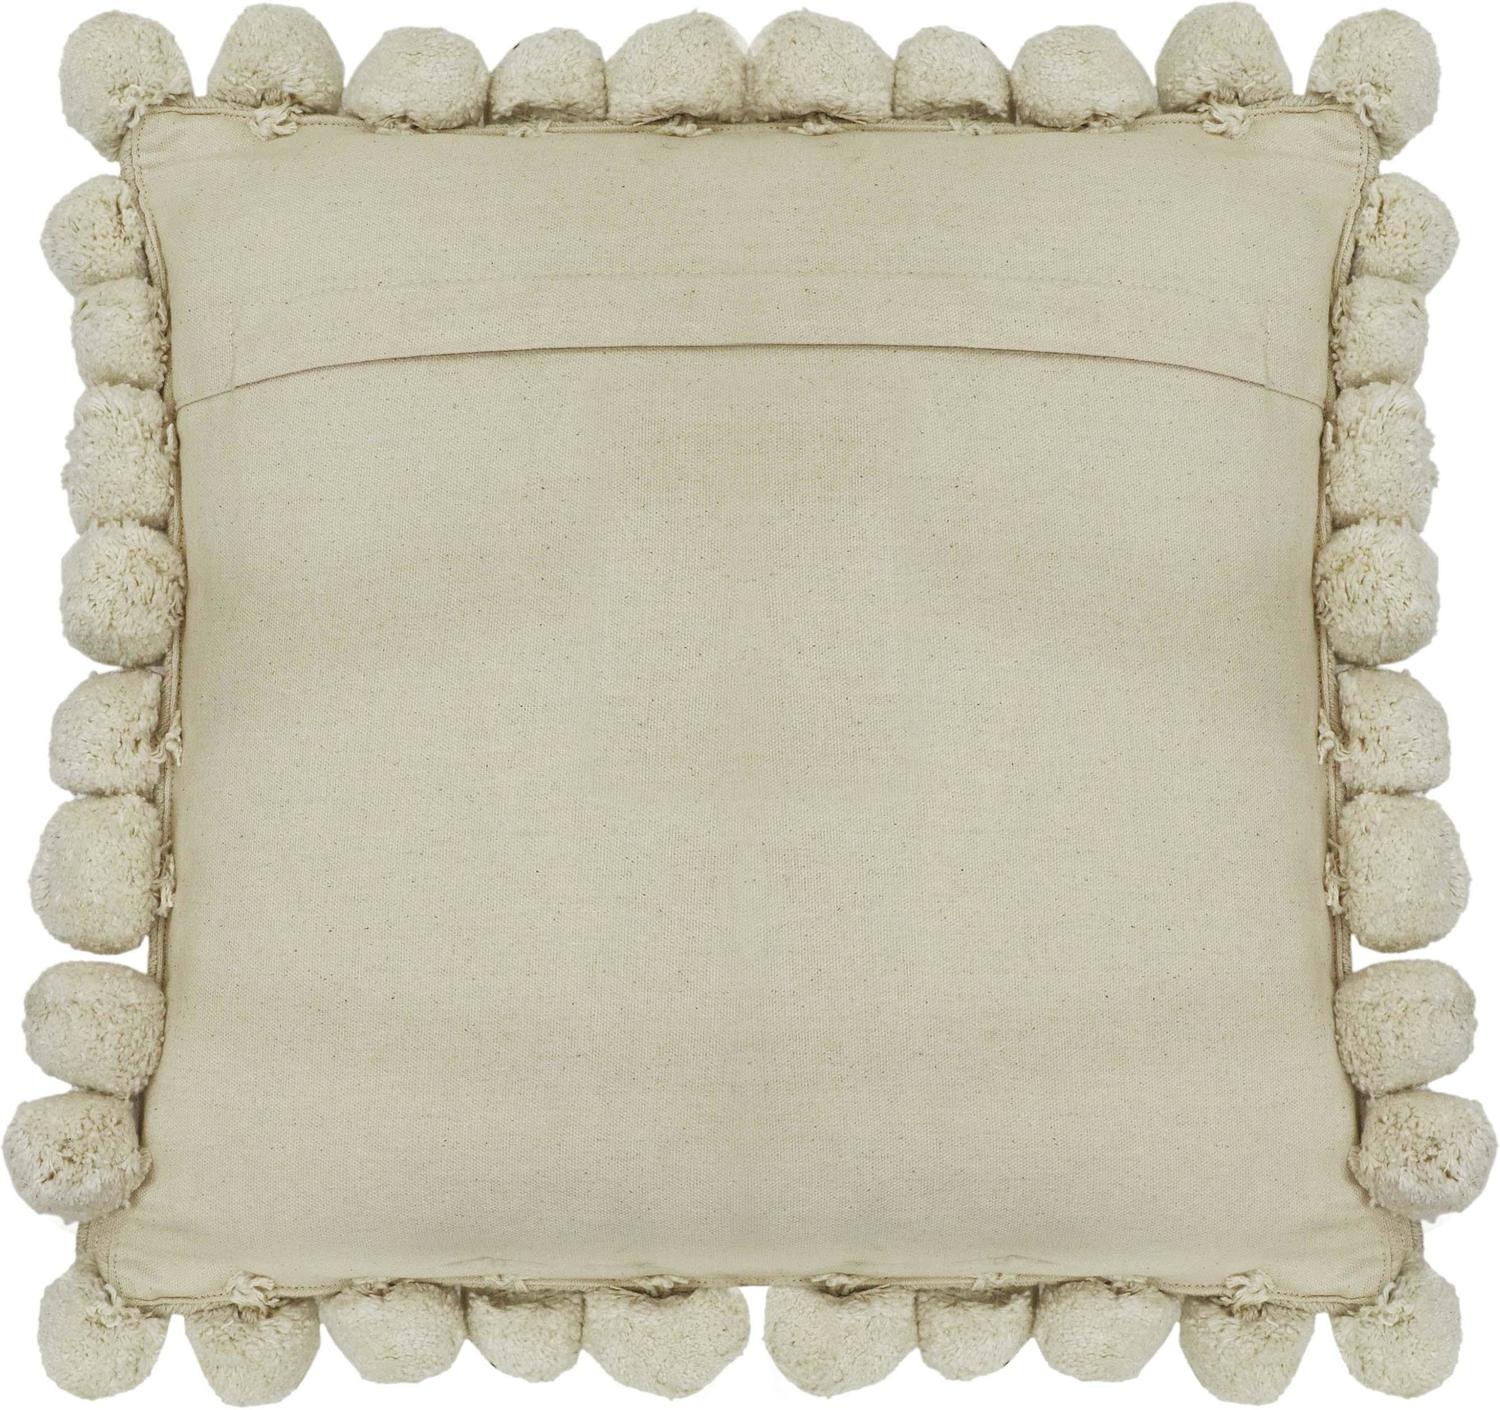 nice pillows for sofa Contemporary Design Furniture Pillows Natural